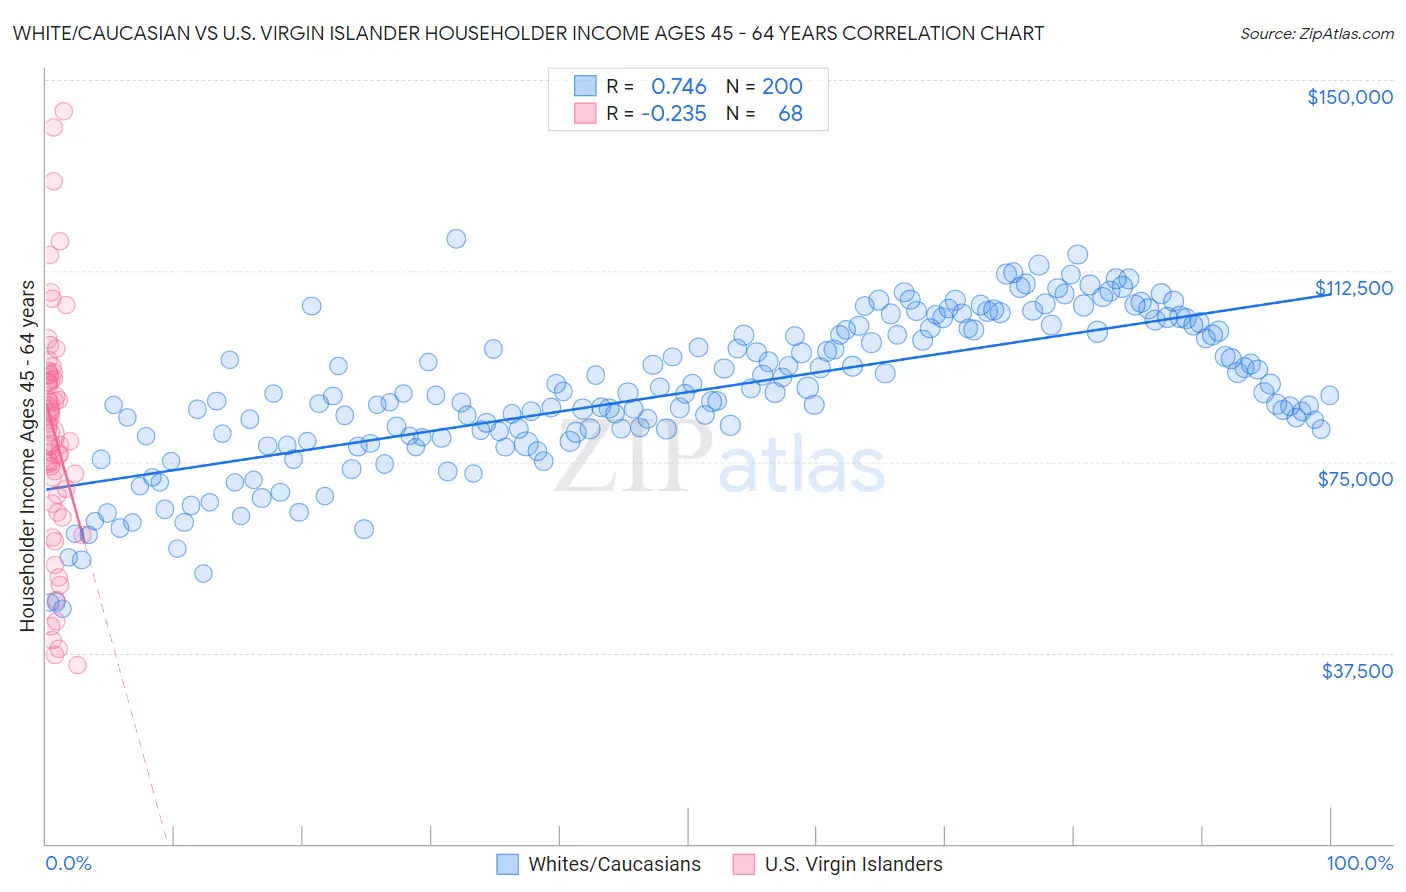 White/Caucasian vs U.S. Virgin Islander Householder Income Ages 45 - 64 years